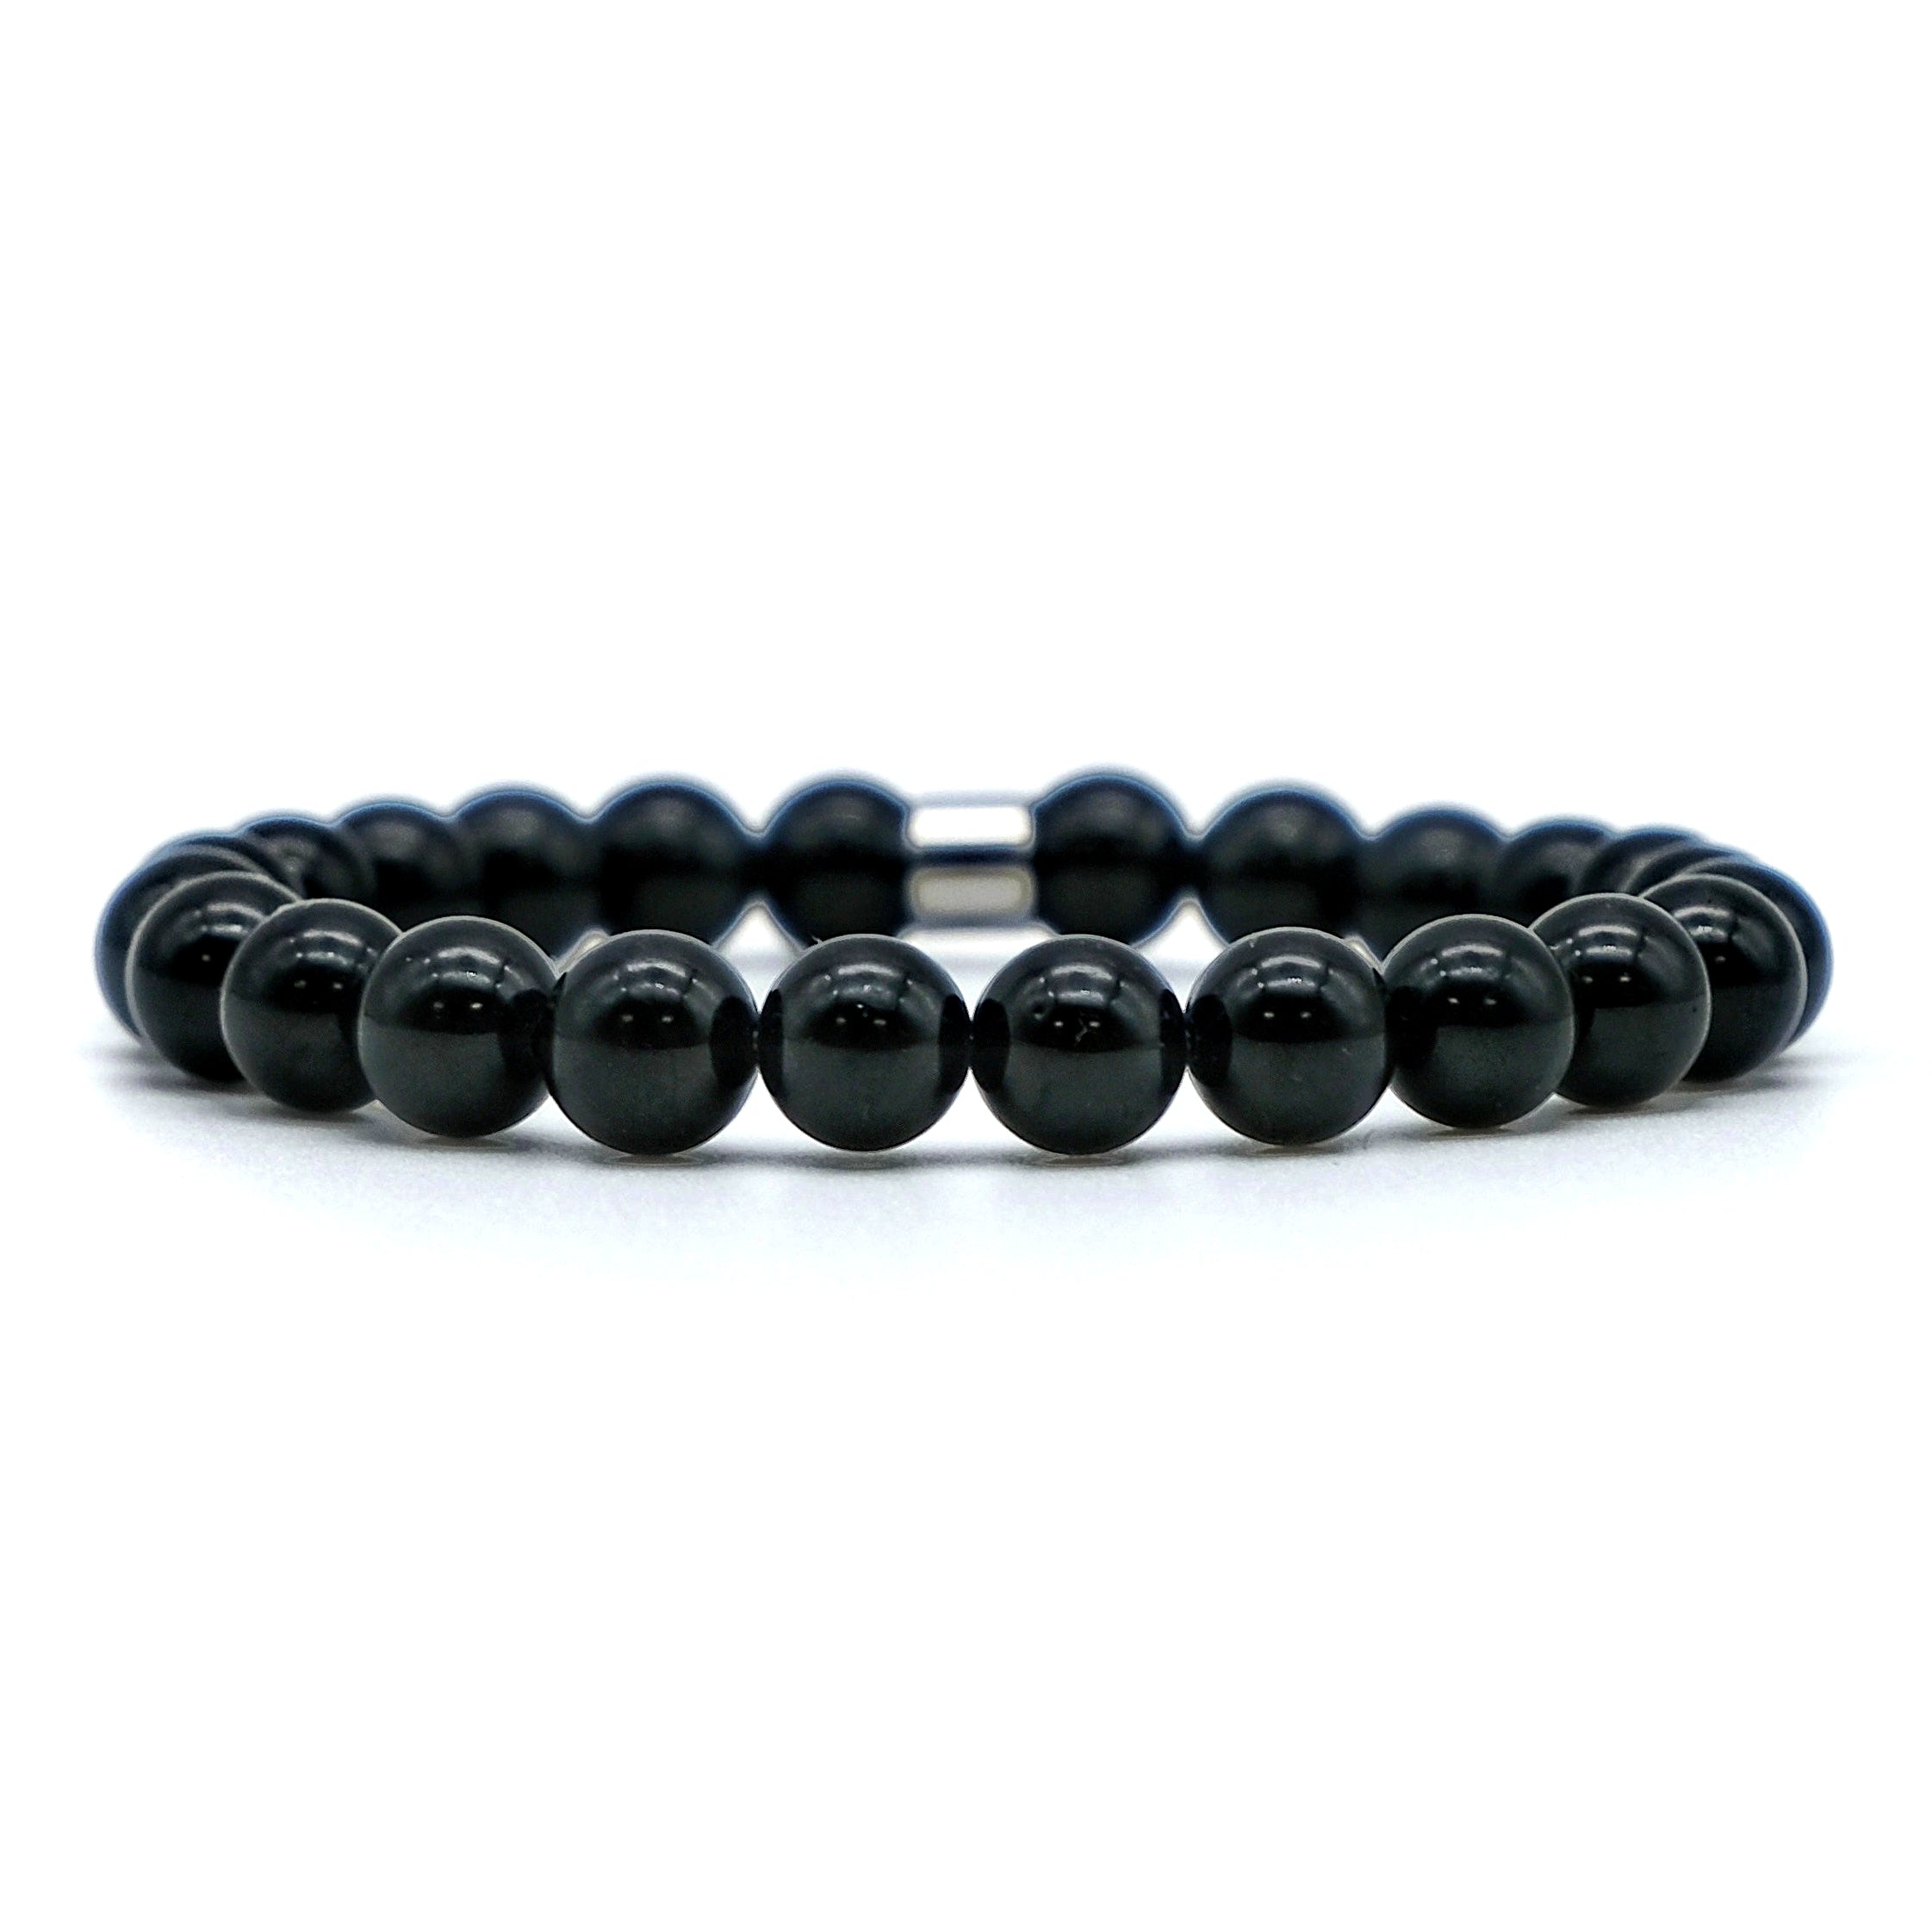 8mm Black Tourmaline gemstone bracelet with stainless steel accessory